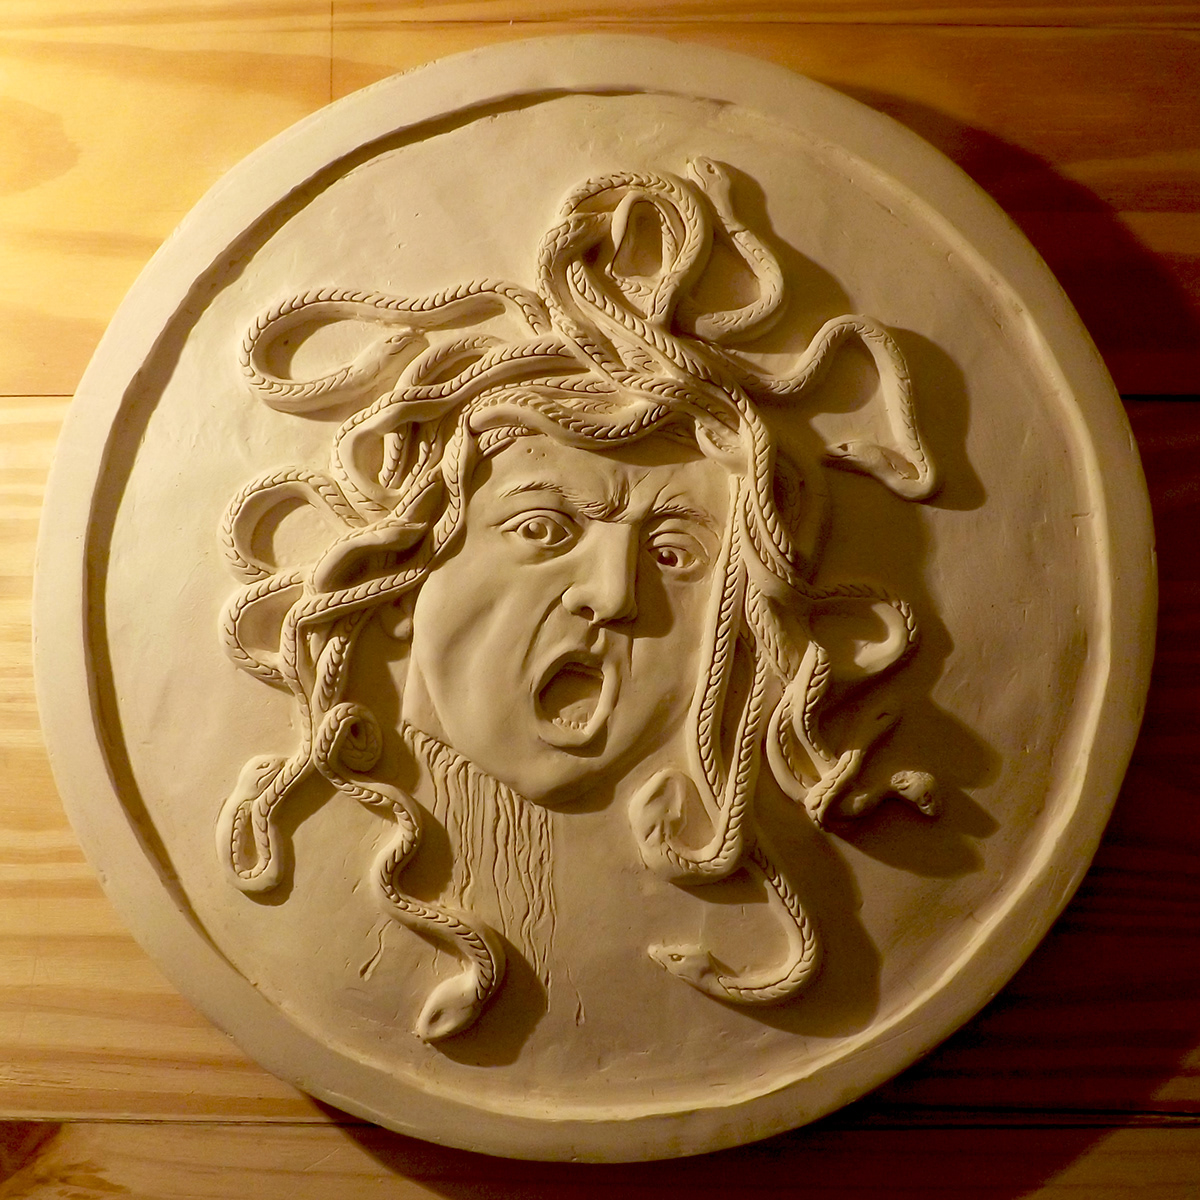 medusa clay plaster caravaggio relief sculpture snakes modelling portrait greek myth